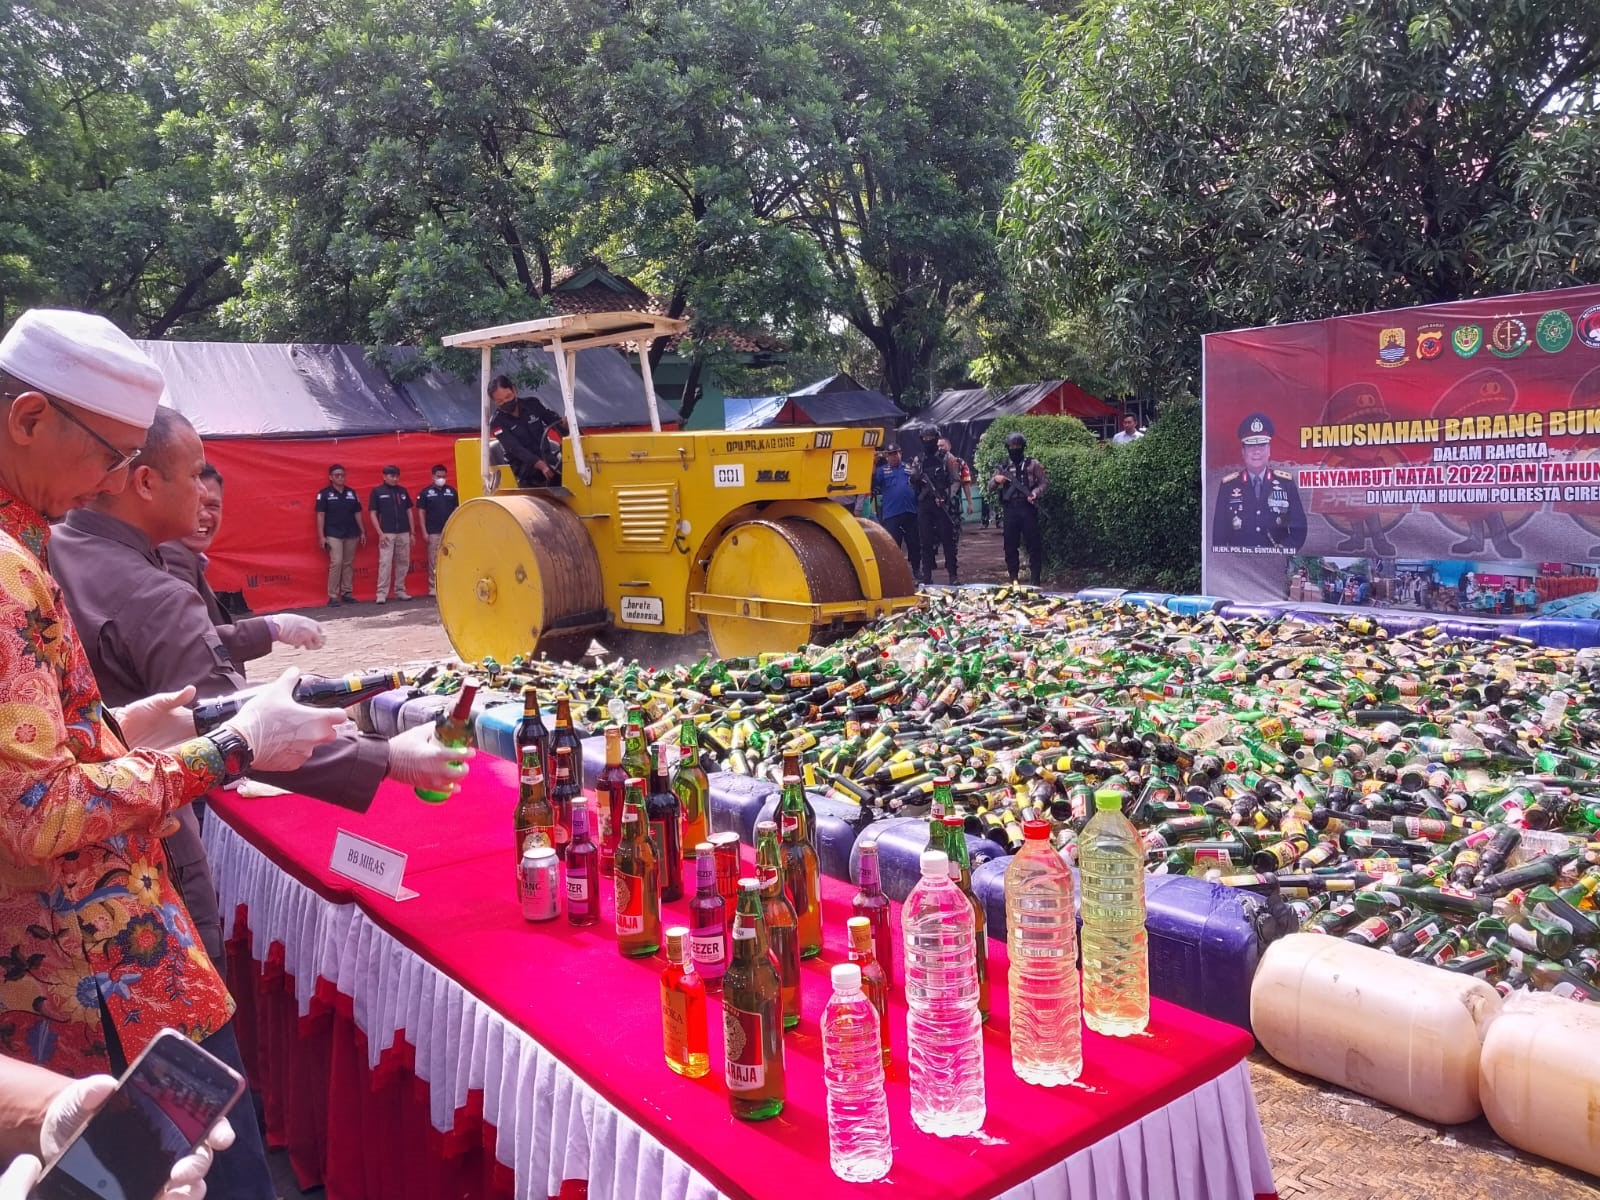 Jelang Nataru, Puluhan Ribu Botol Miras Dimusnahkan  di GOR Ranggajati